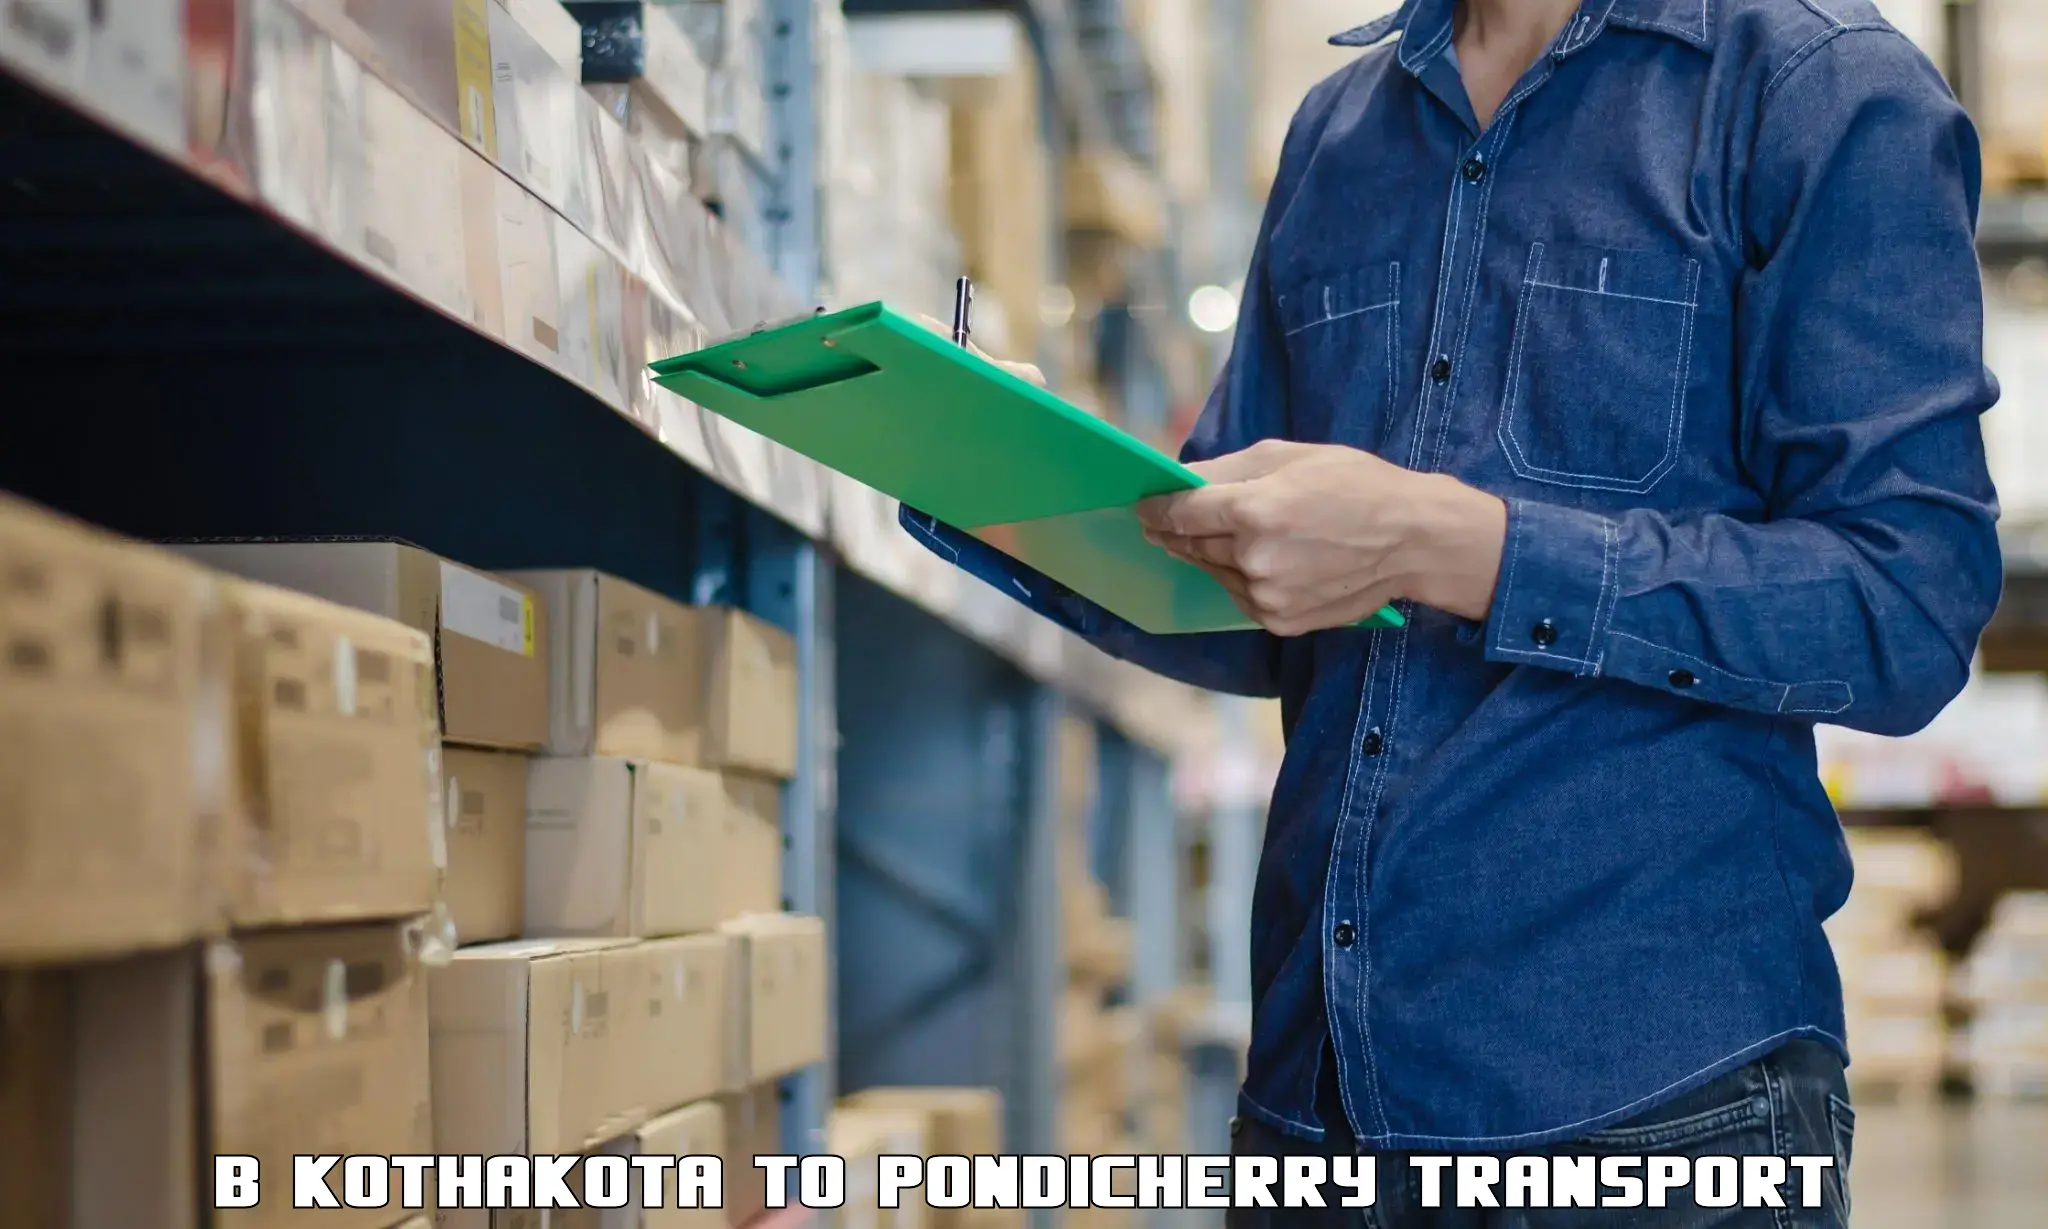 Road transport online services B Kothakota to Pondicherry